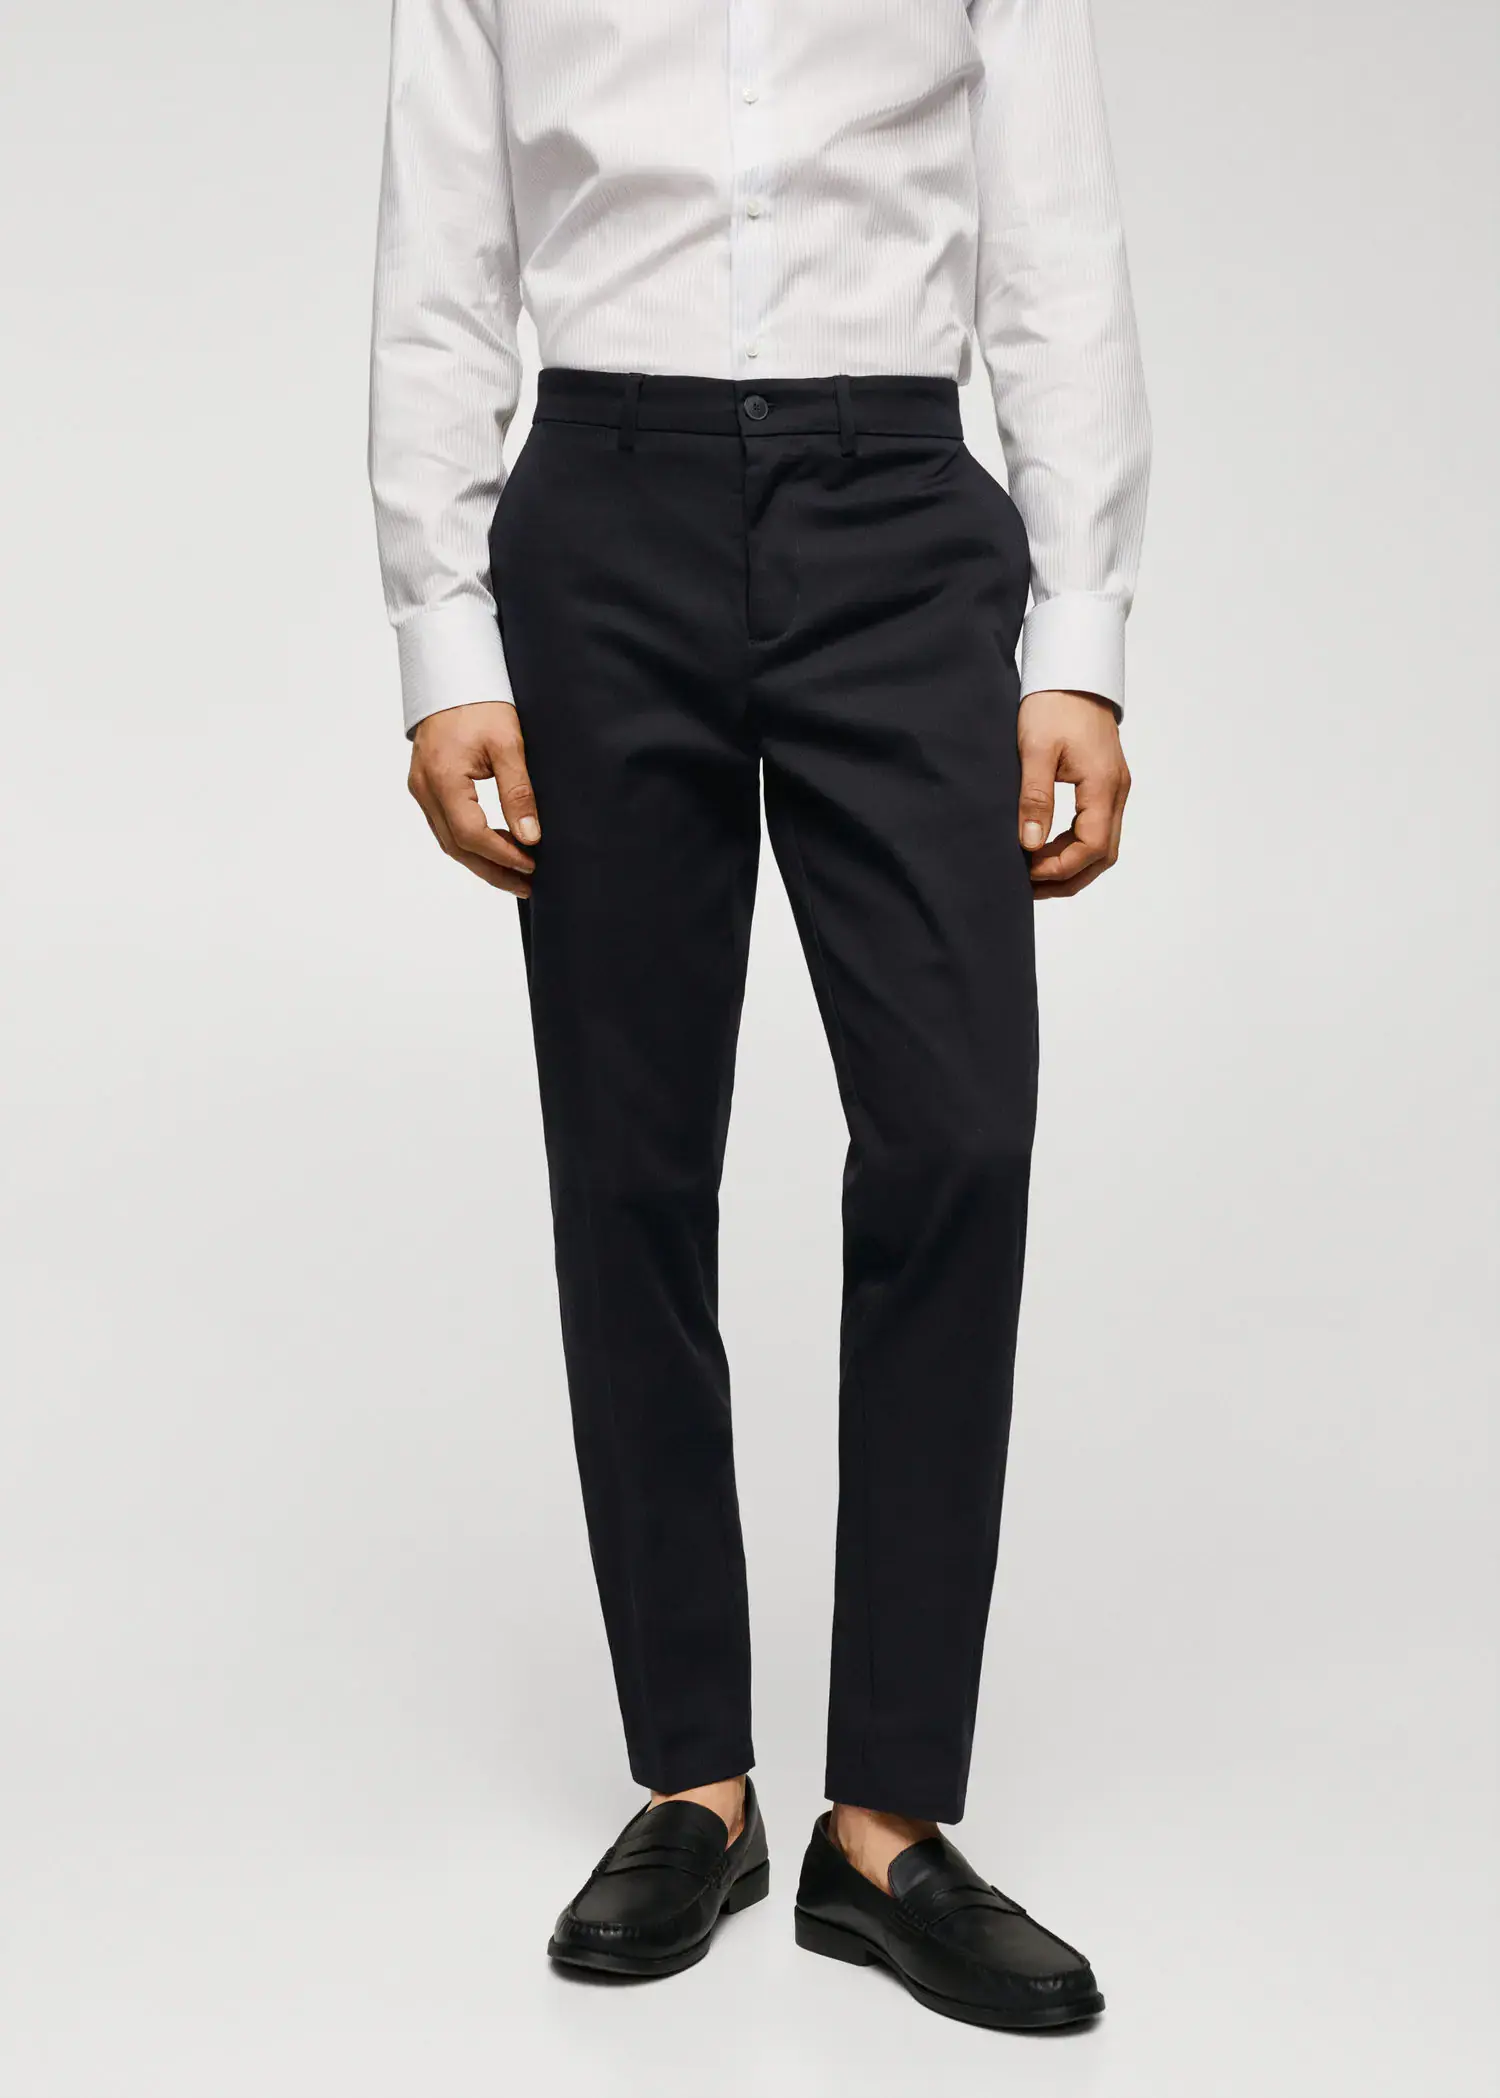 Mango Slim fit chino trousers. a man wearing a white shirt and black pants. 